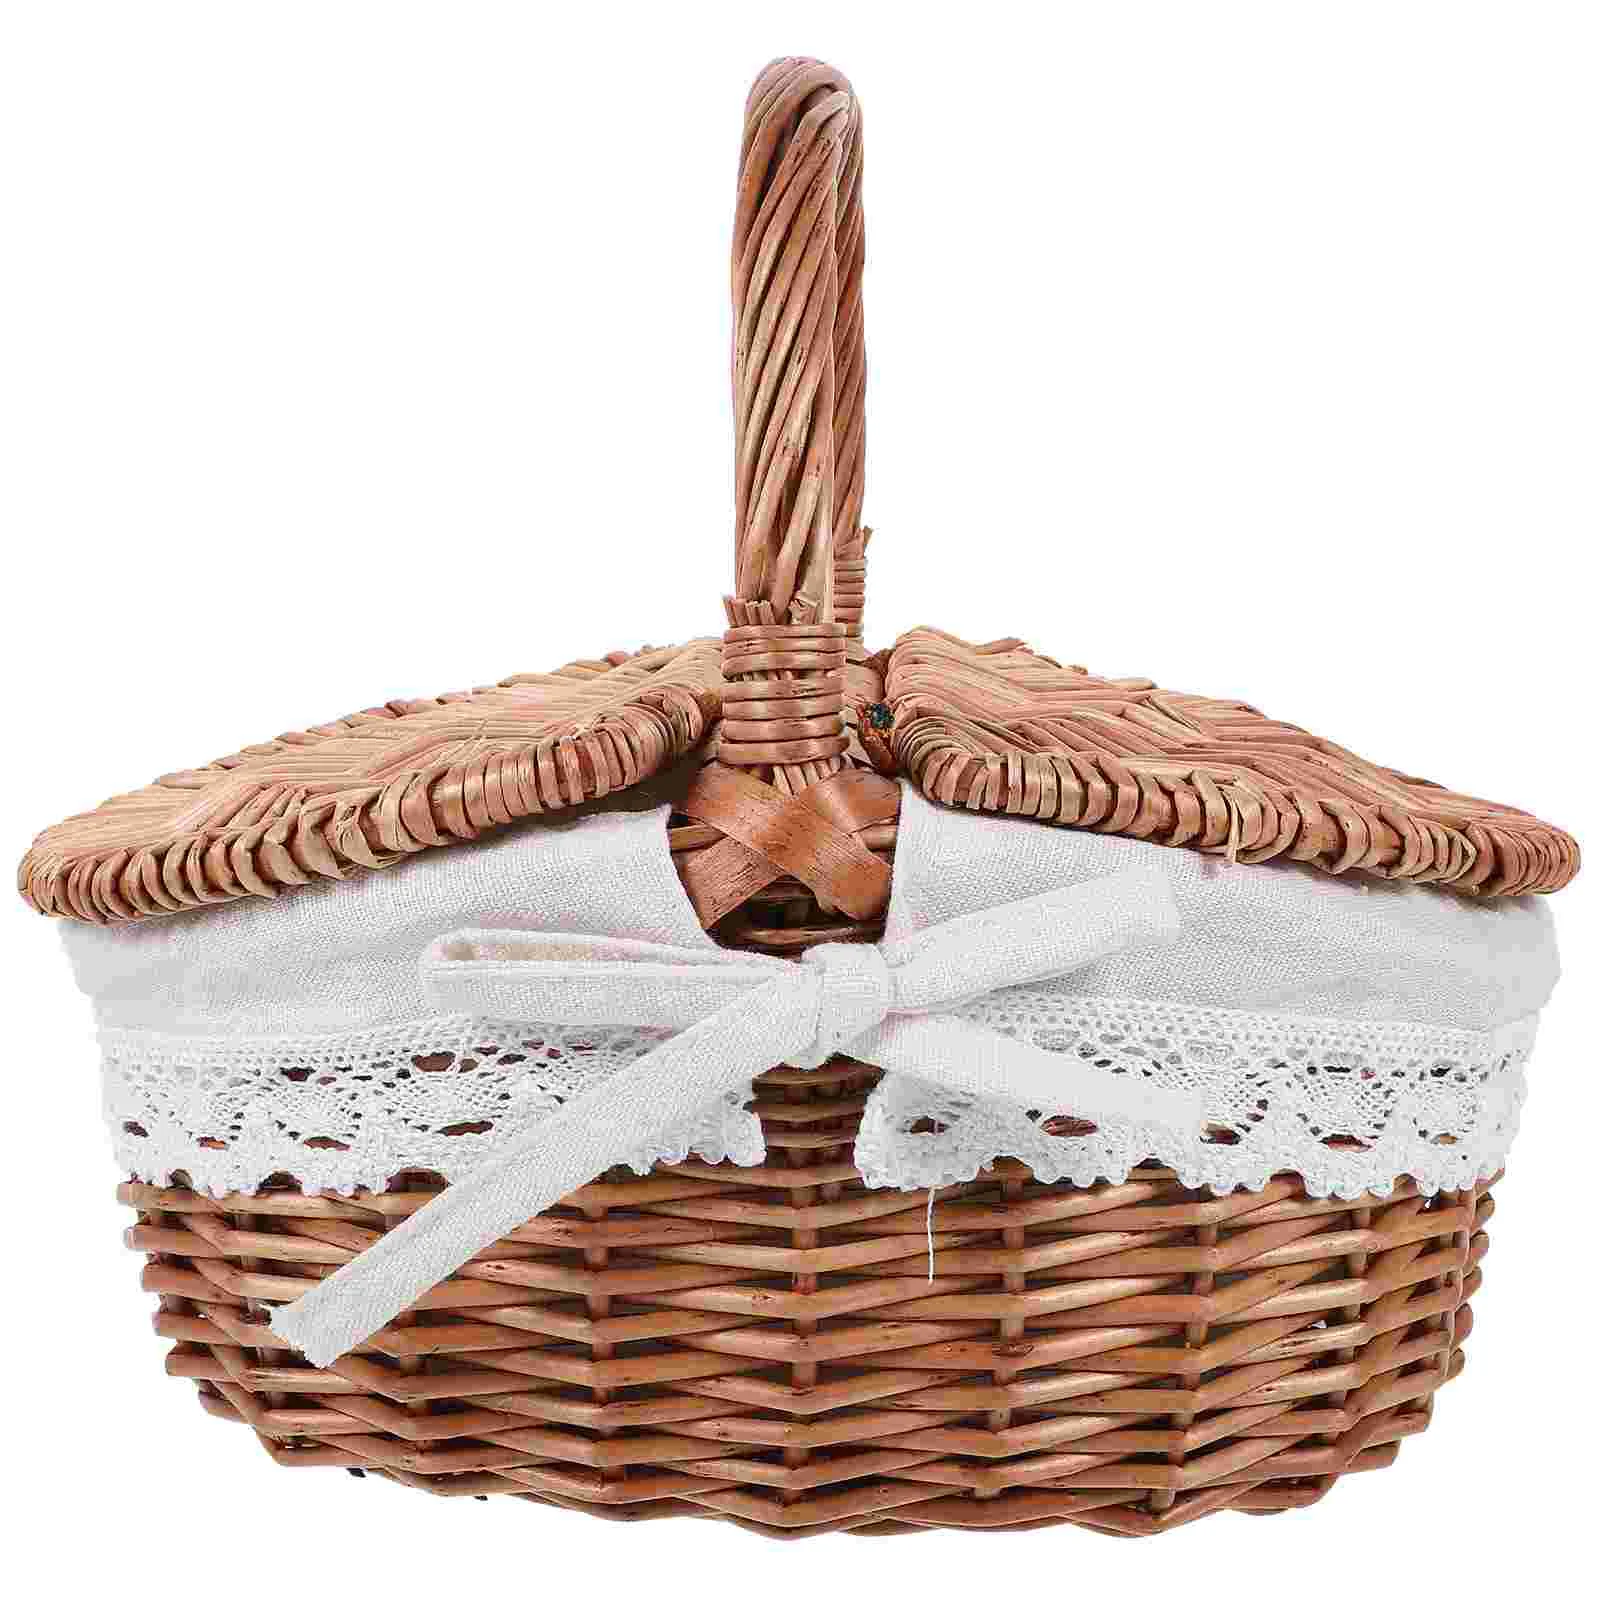 

Storage Basket Wicker Basket Egg Gathering Picnic Fruit Bread Breakfast Basket with Lid Portable Outdoor Camping Storage